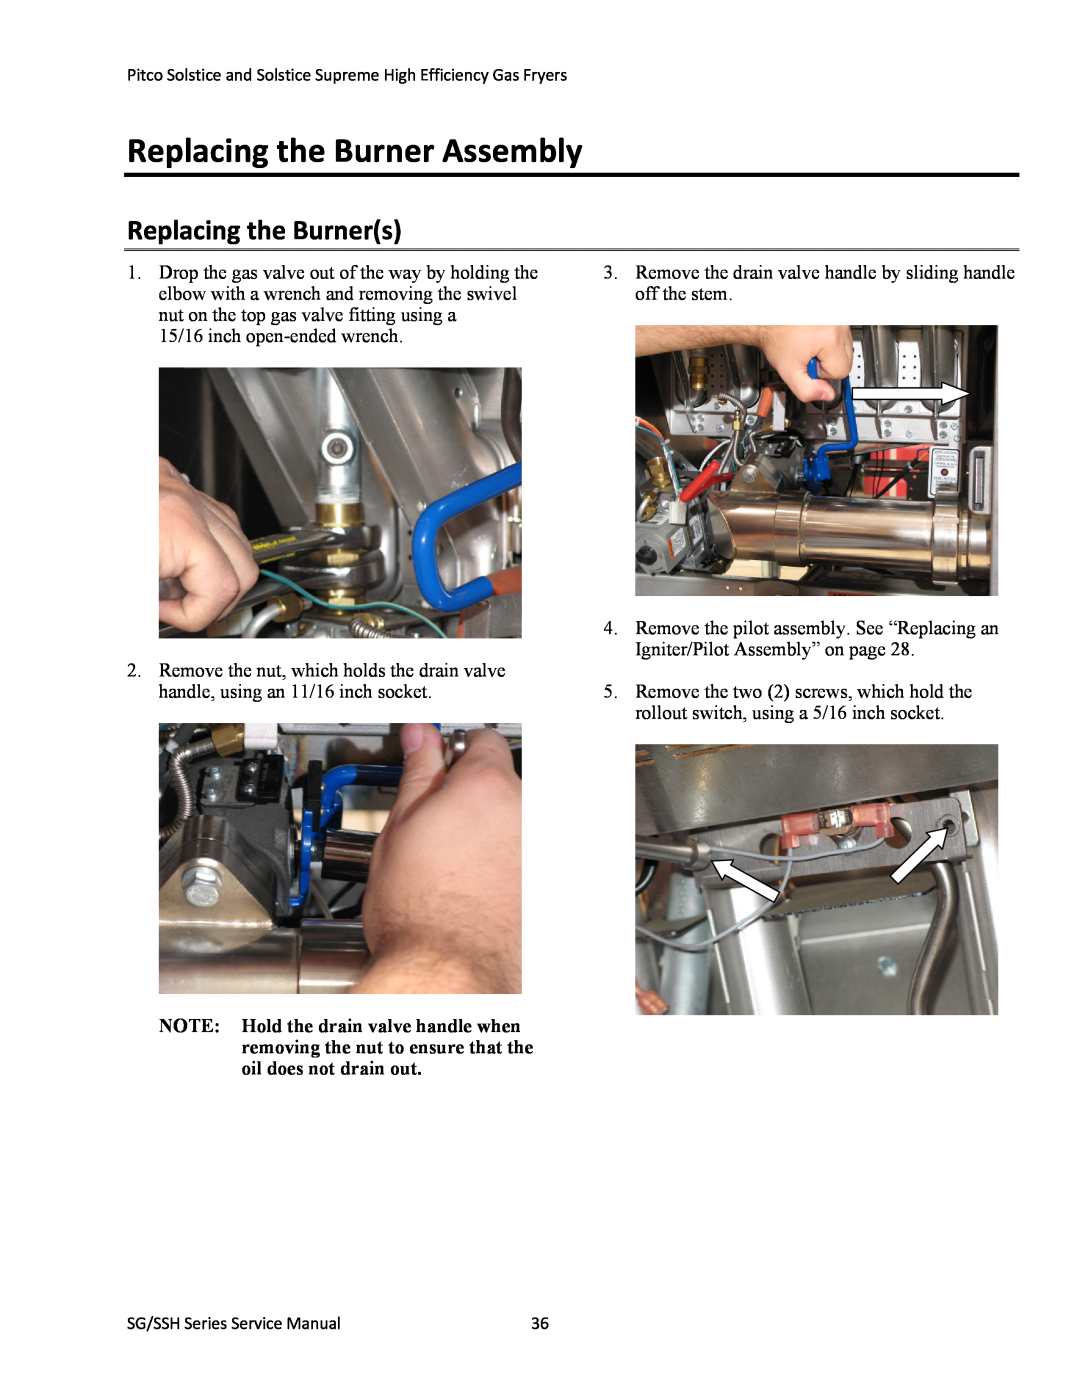 Pitco Frialator L22-345 manual Replacing the Burner Assembly, Replacing the Burners 